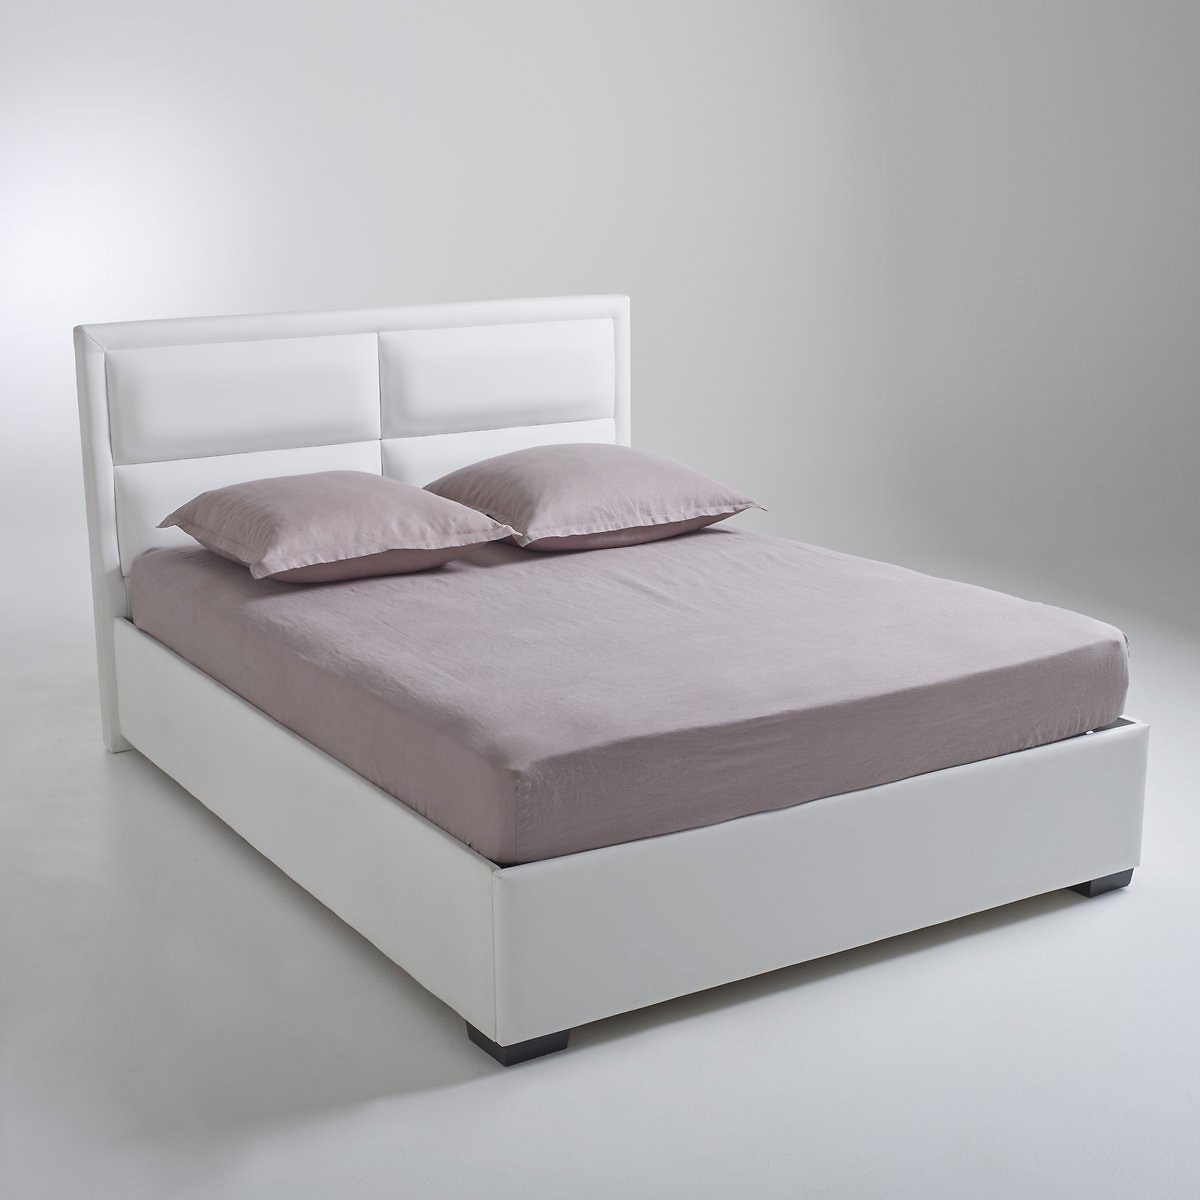 Кровать-сундук La Redoute И изголовьем Blax 140 x 190 см белый, размер 140 x 190 см - фото 1